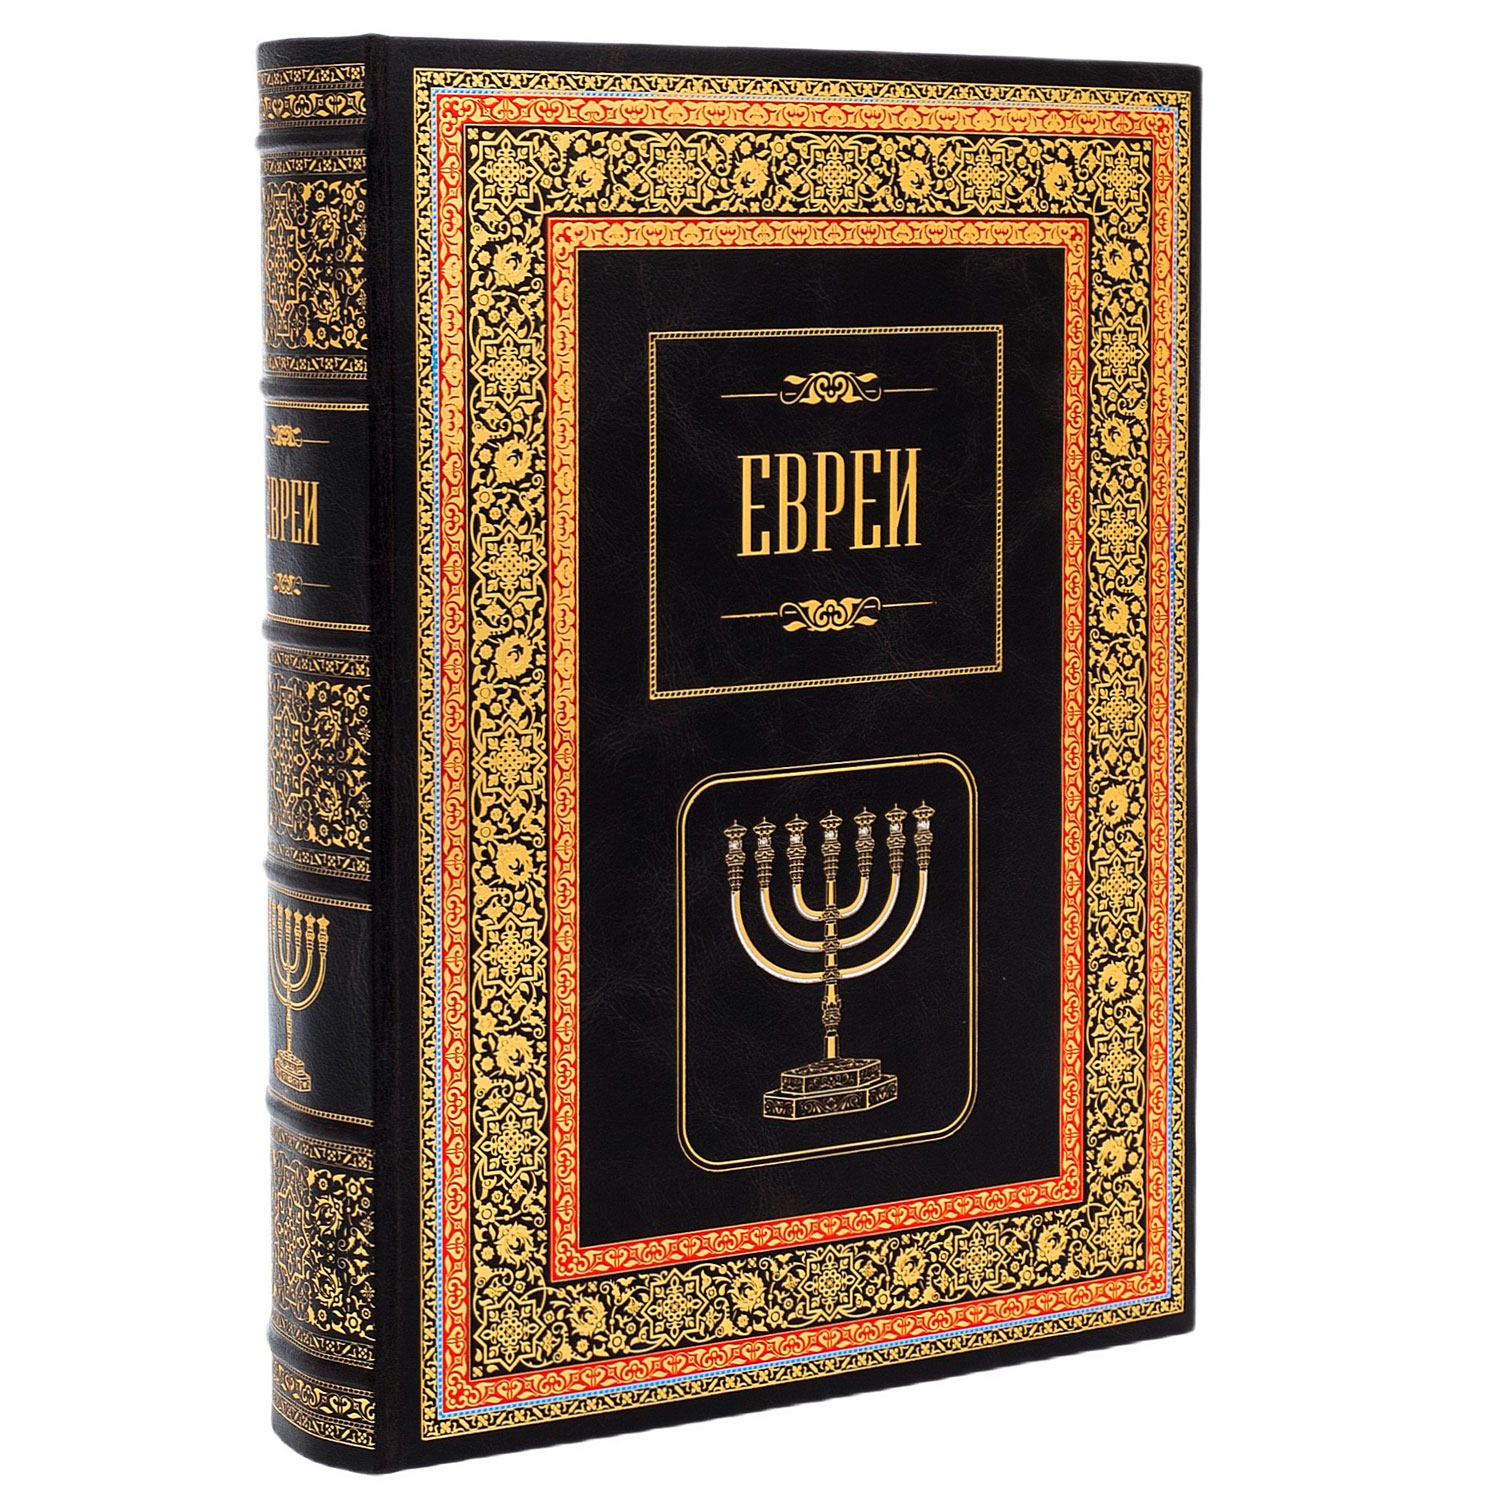 Подарочная книга "Евреи" - артикул: 207256 | Мосподарок 